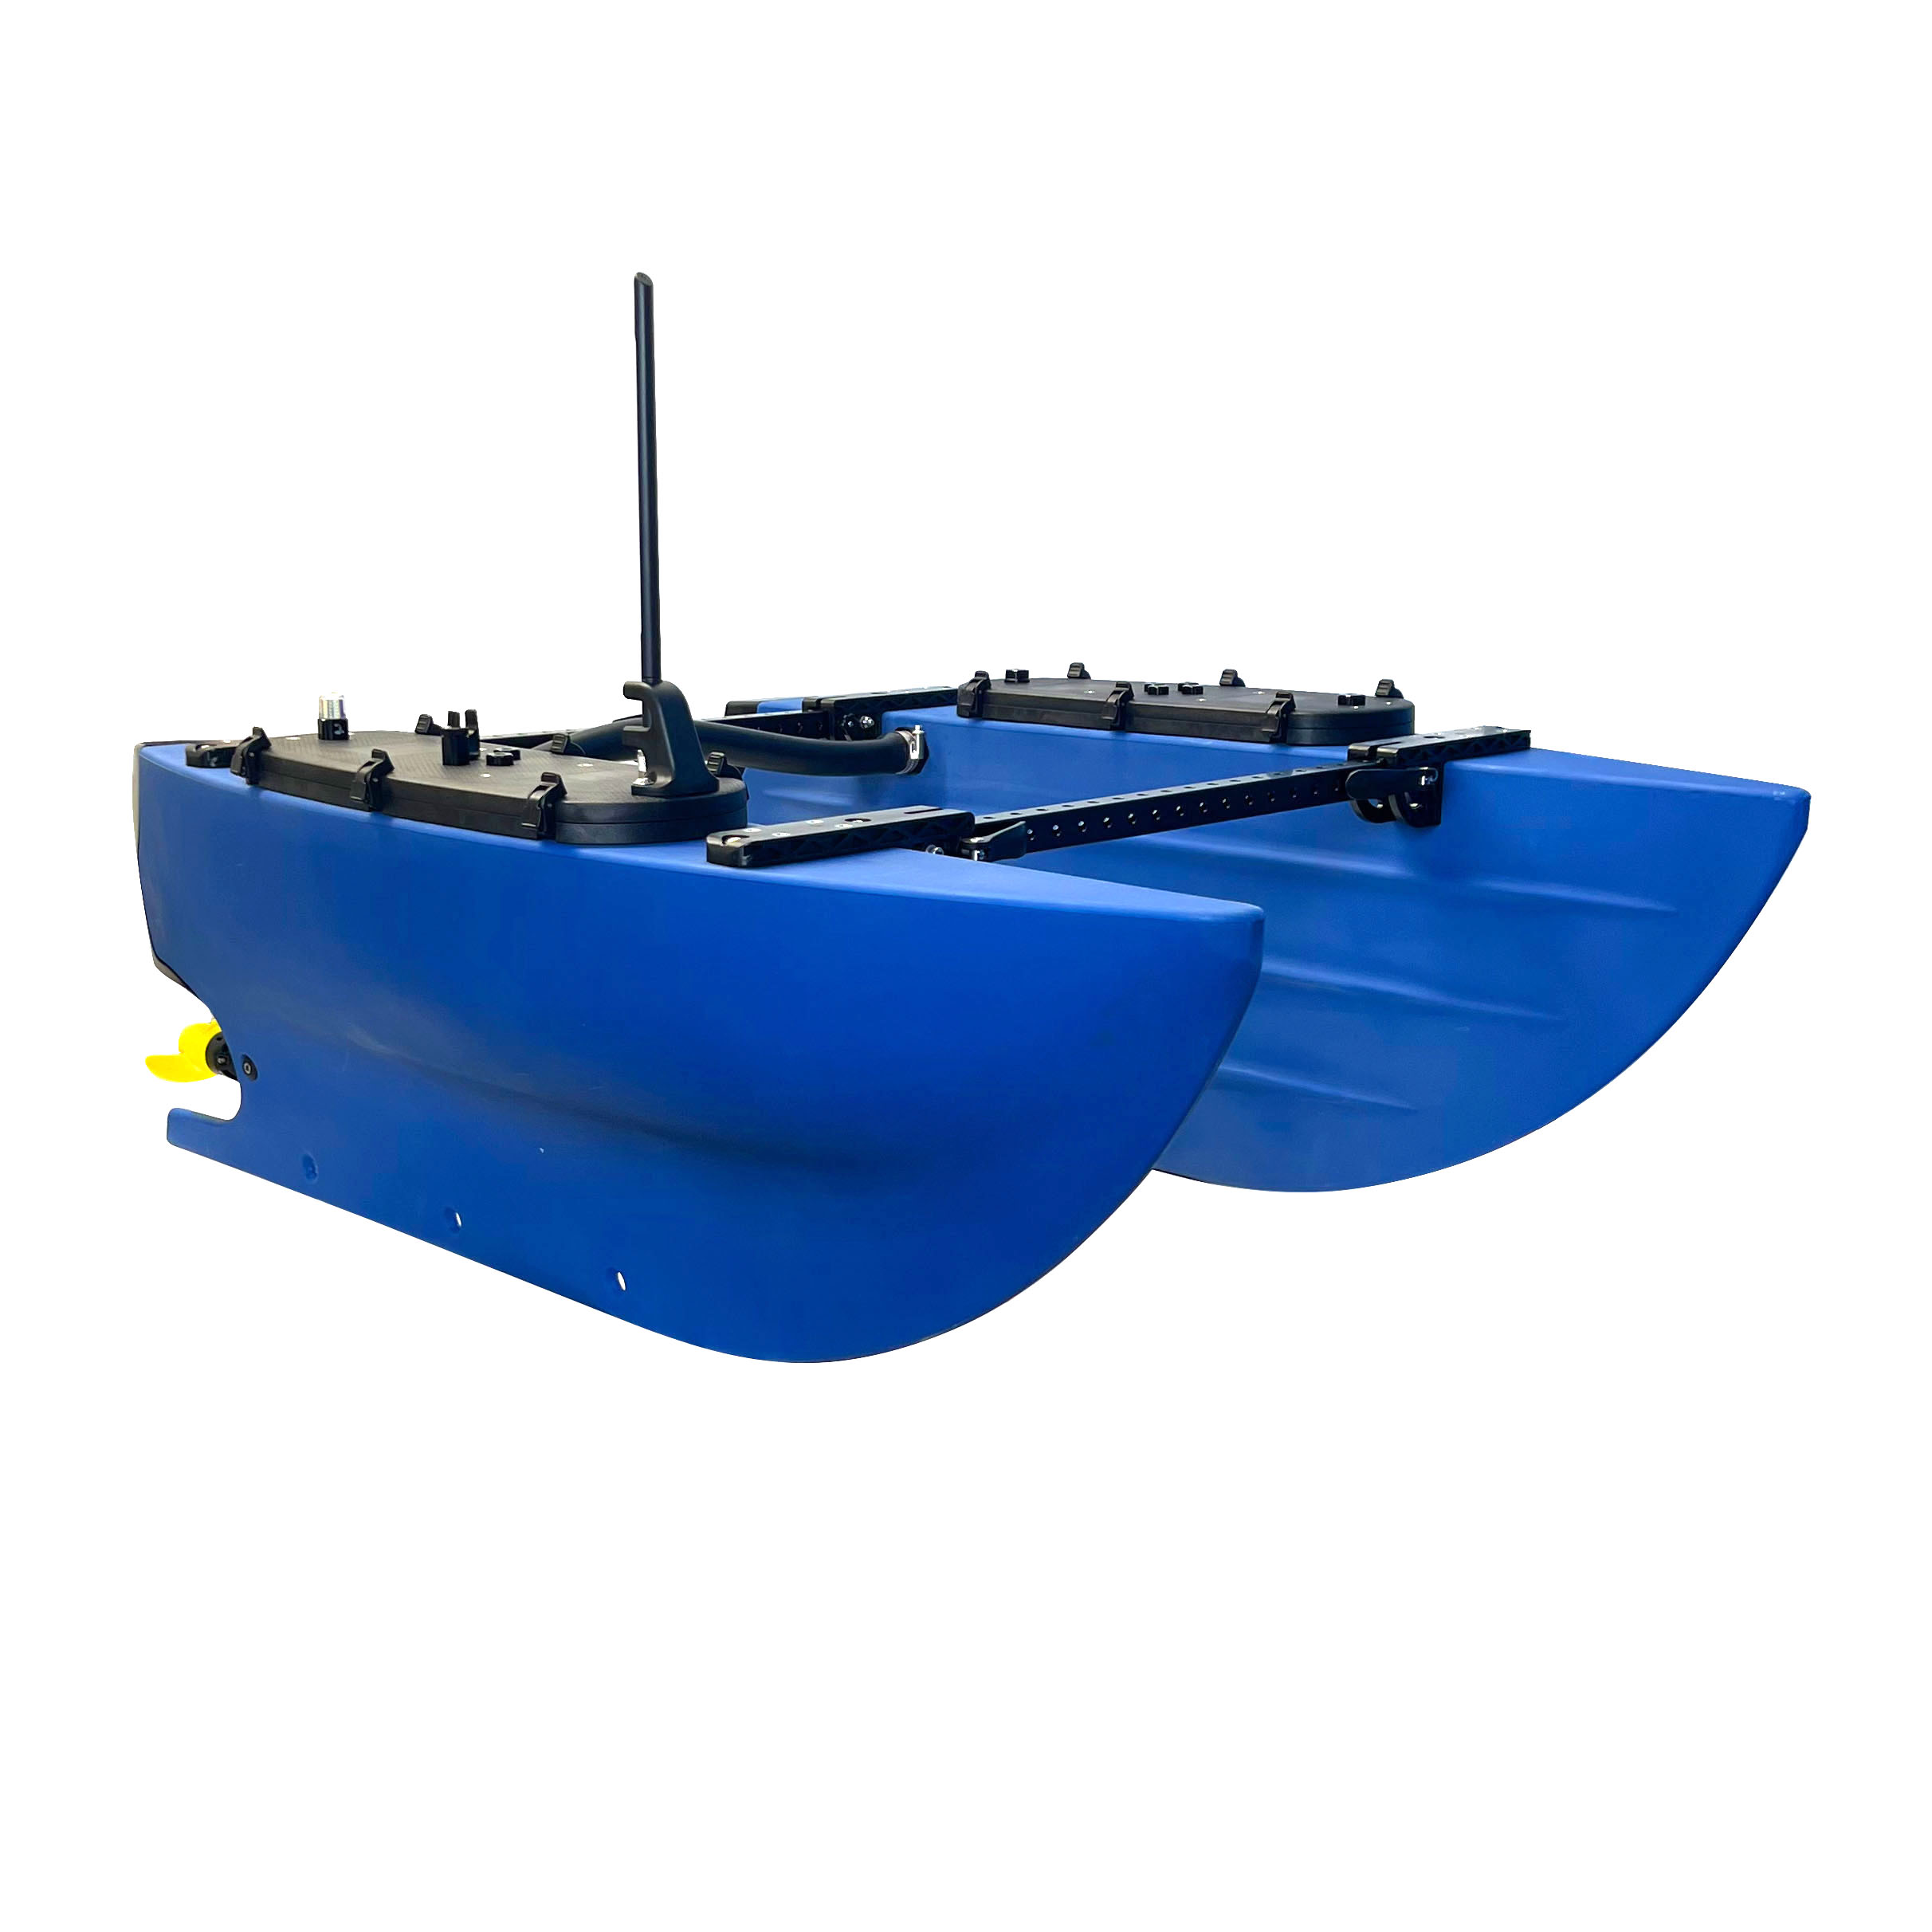 BlueBoat - USV for Hydrographic Surveys and Robotics